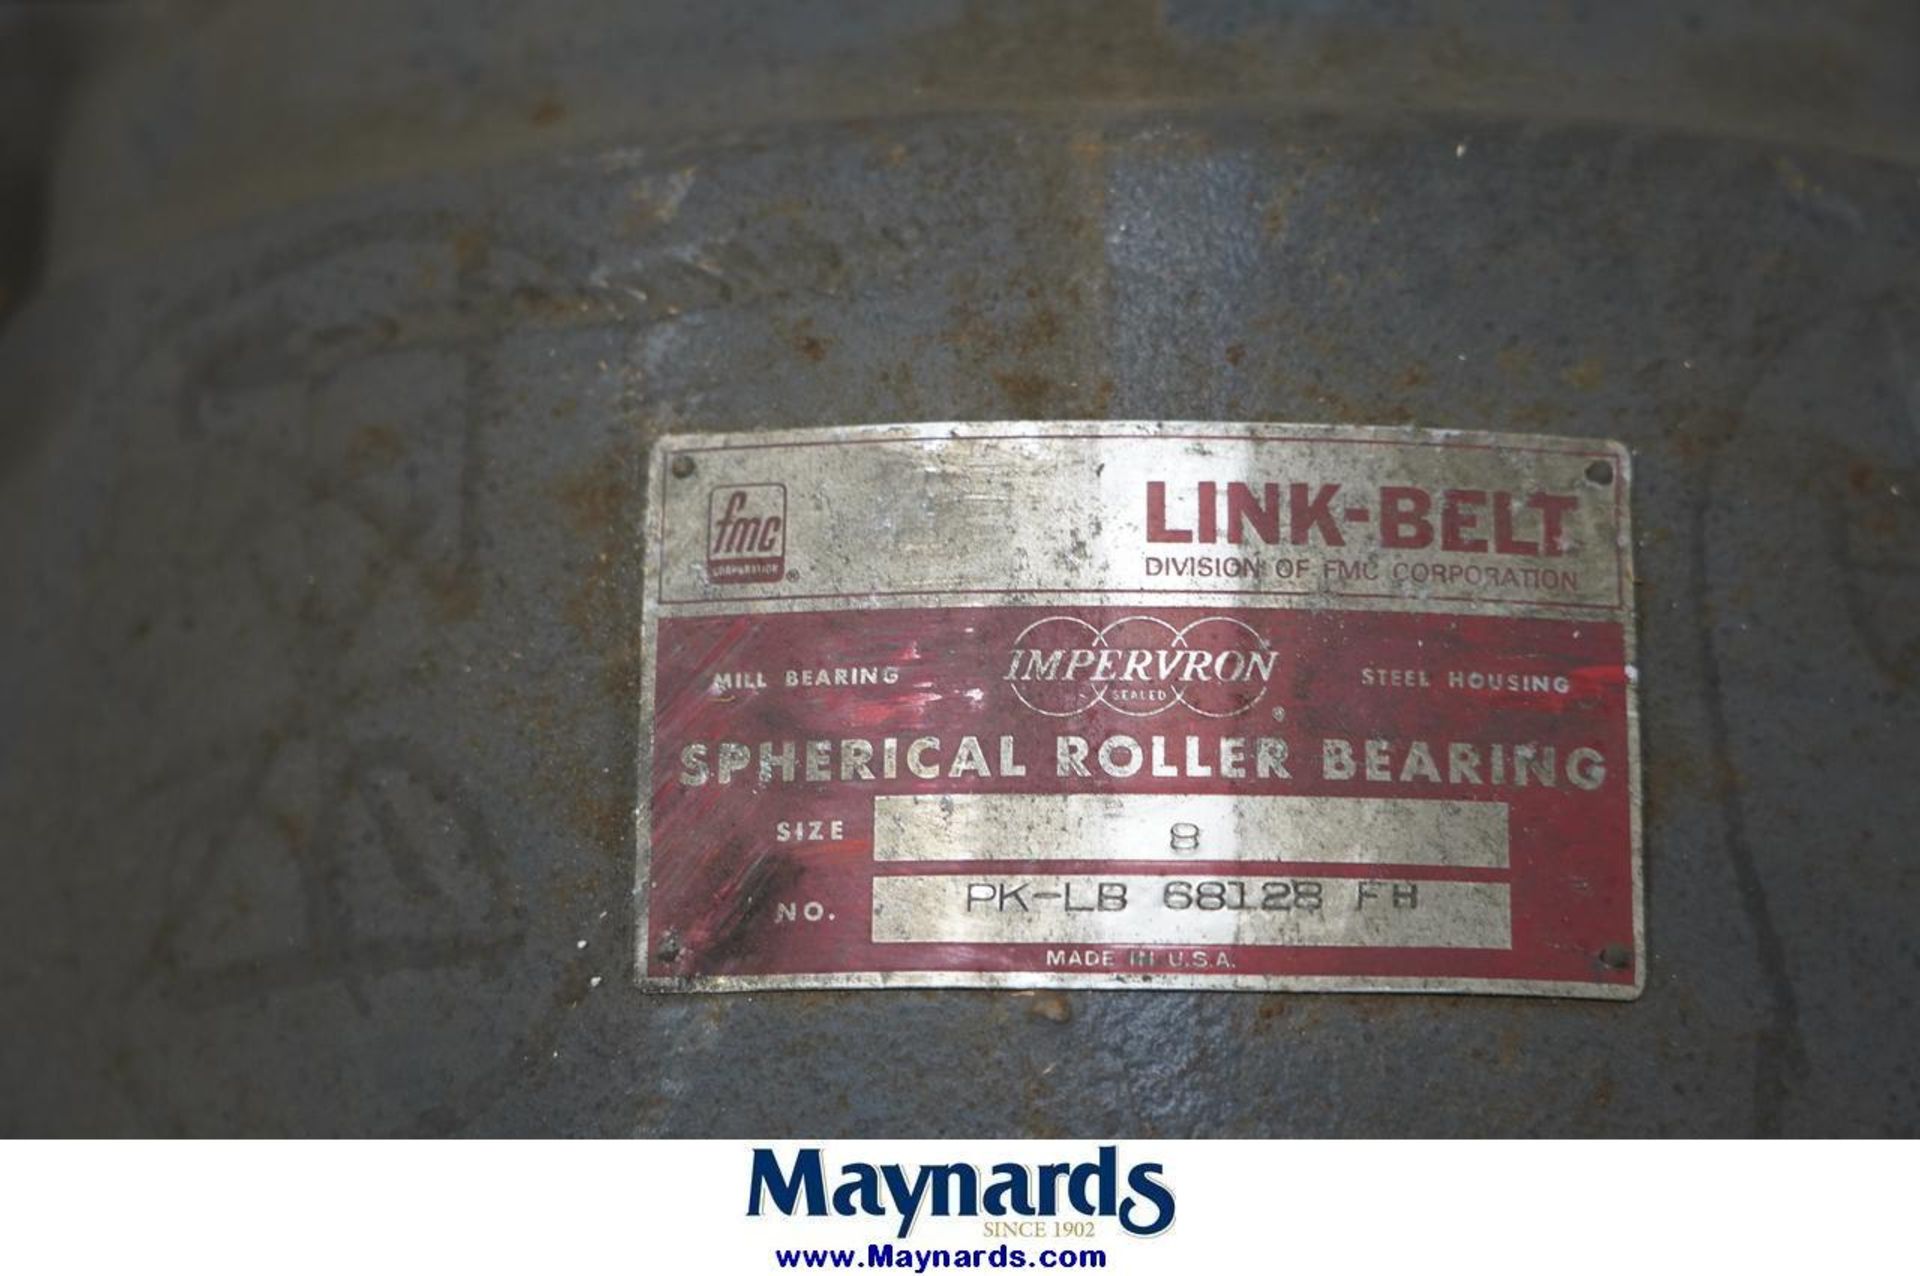 Lot of Link-Belt Spherical Roller Bearing/Mill Bearing - Image 5 of 7